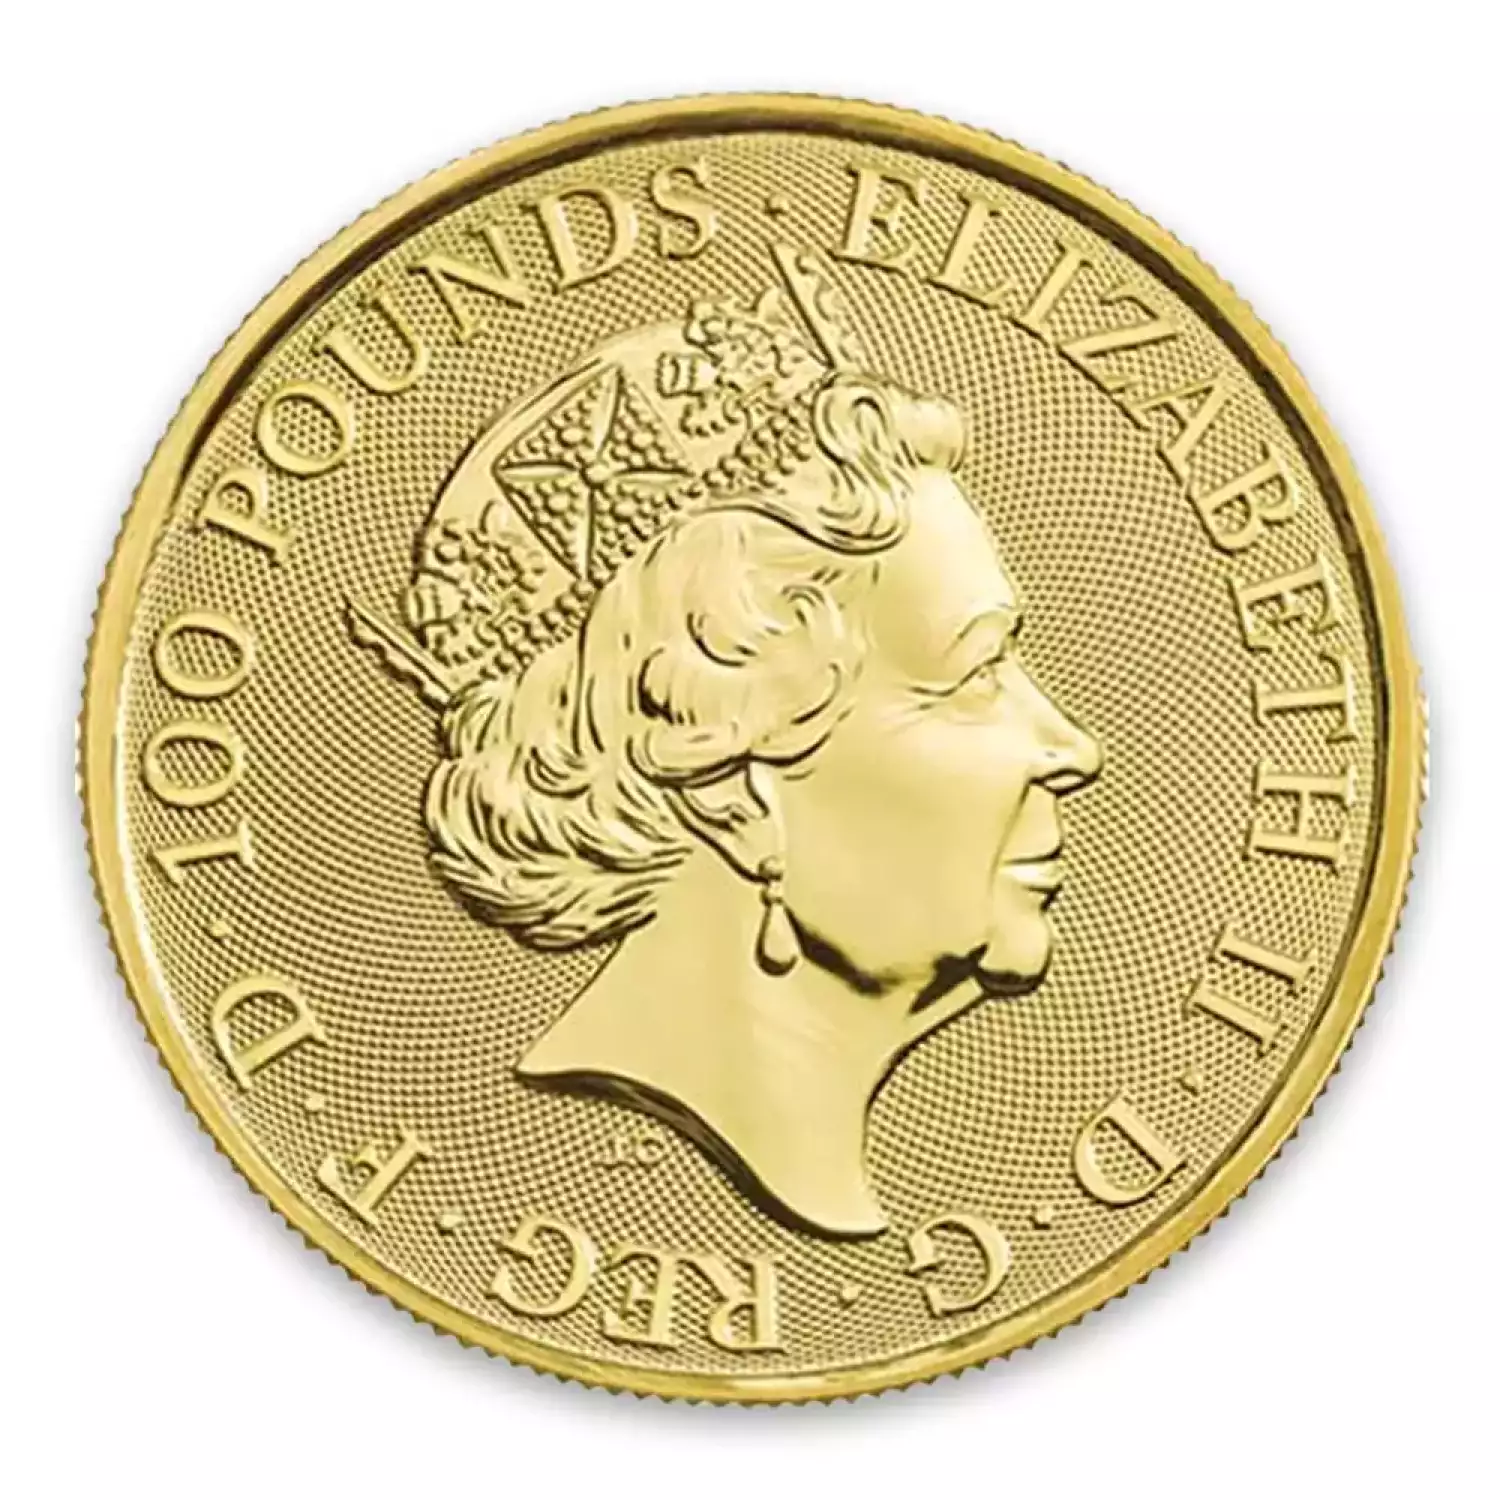 2020 1 oz British Music Legends Queen Gold Coin (2)